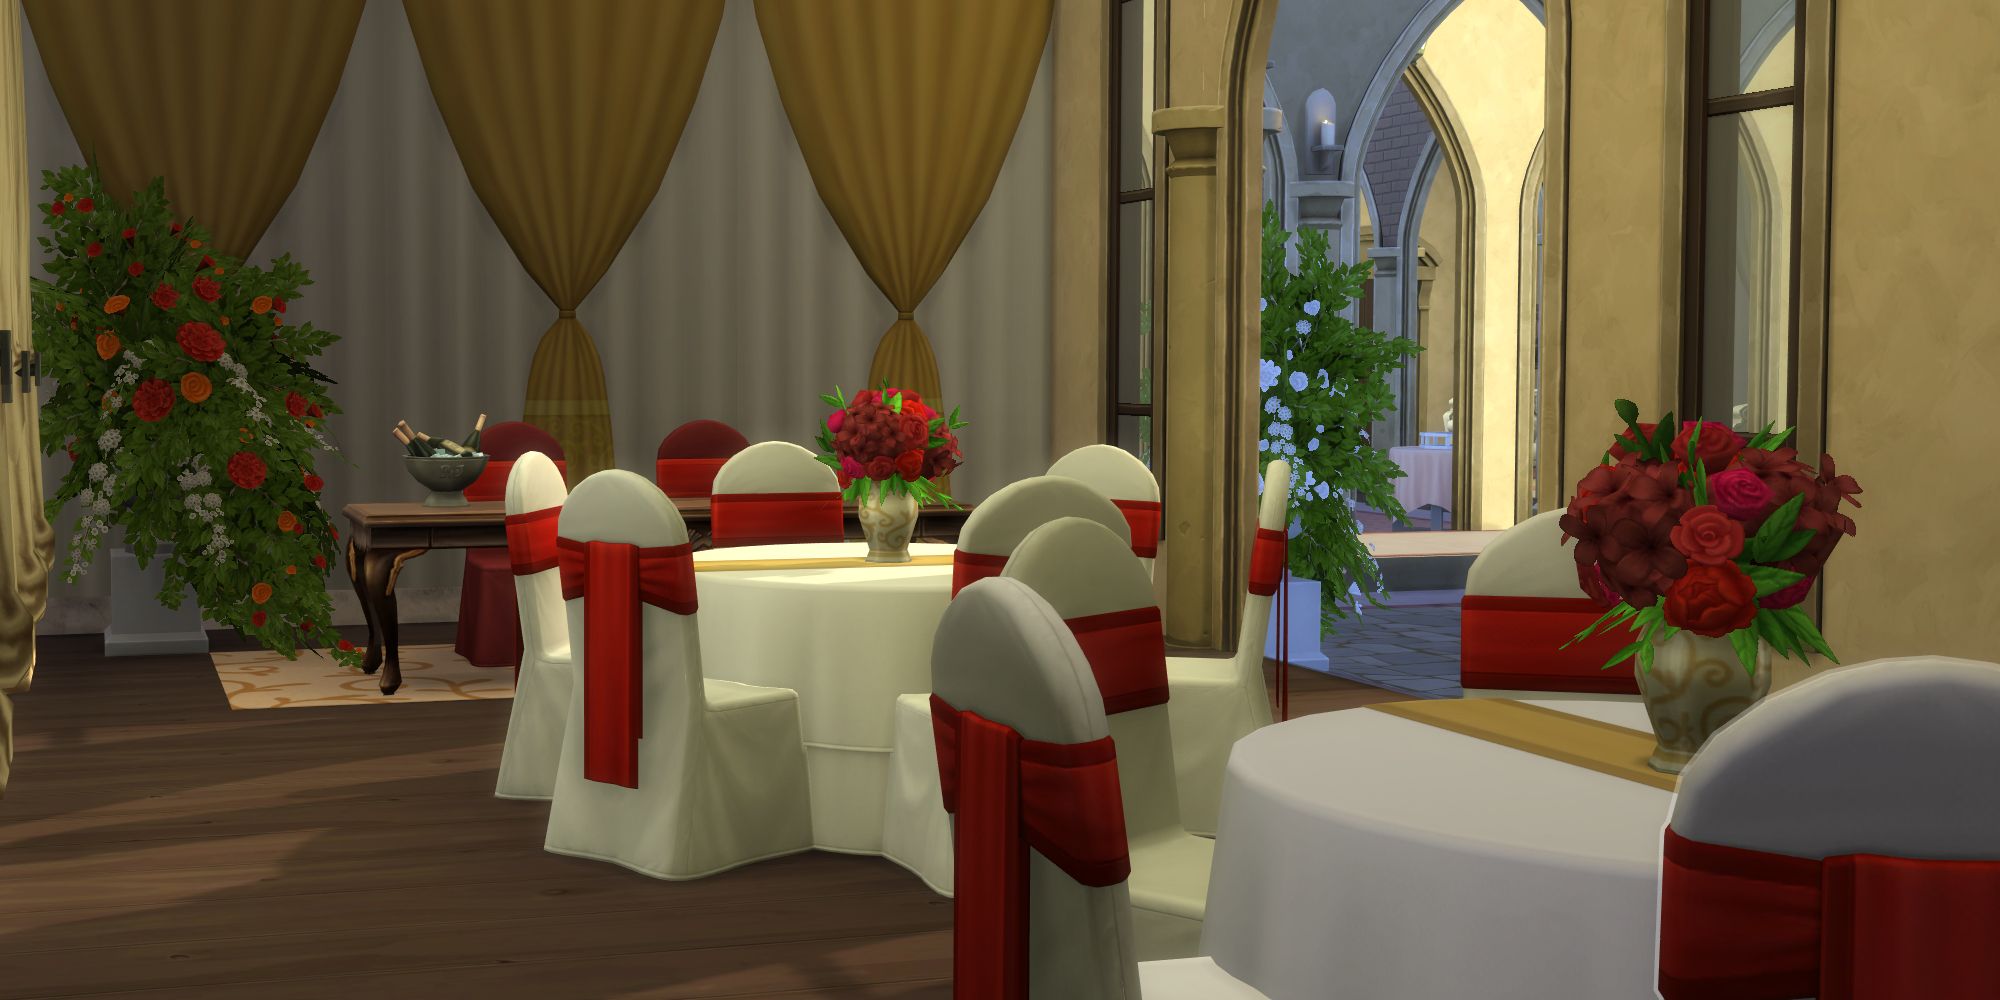 Sims 4 wedding interior seating